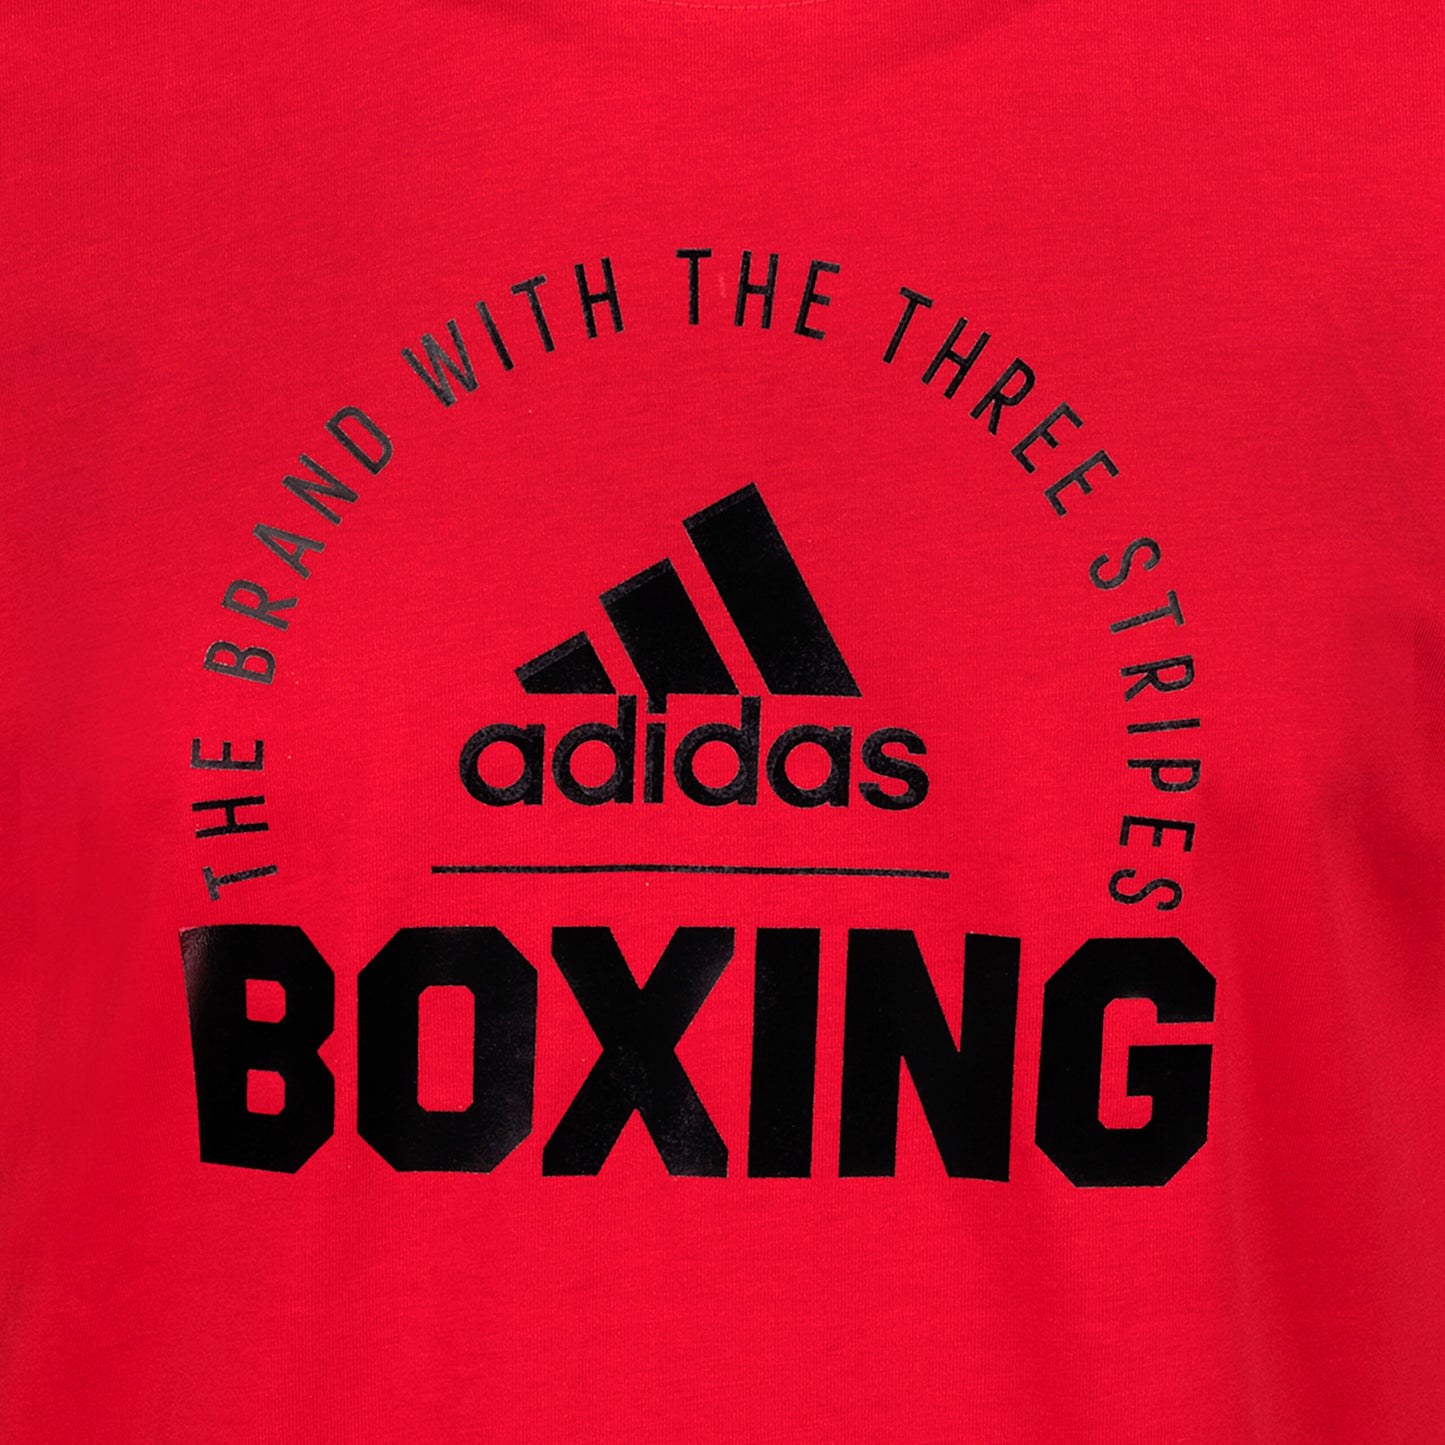 Clts21 B Adidas Boxing T Shirt Red 05